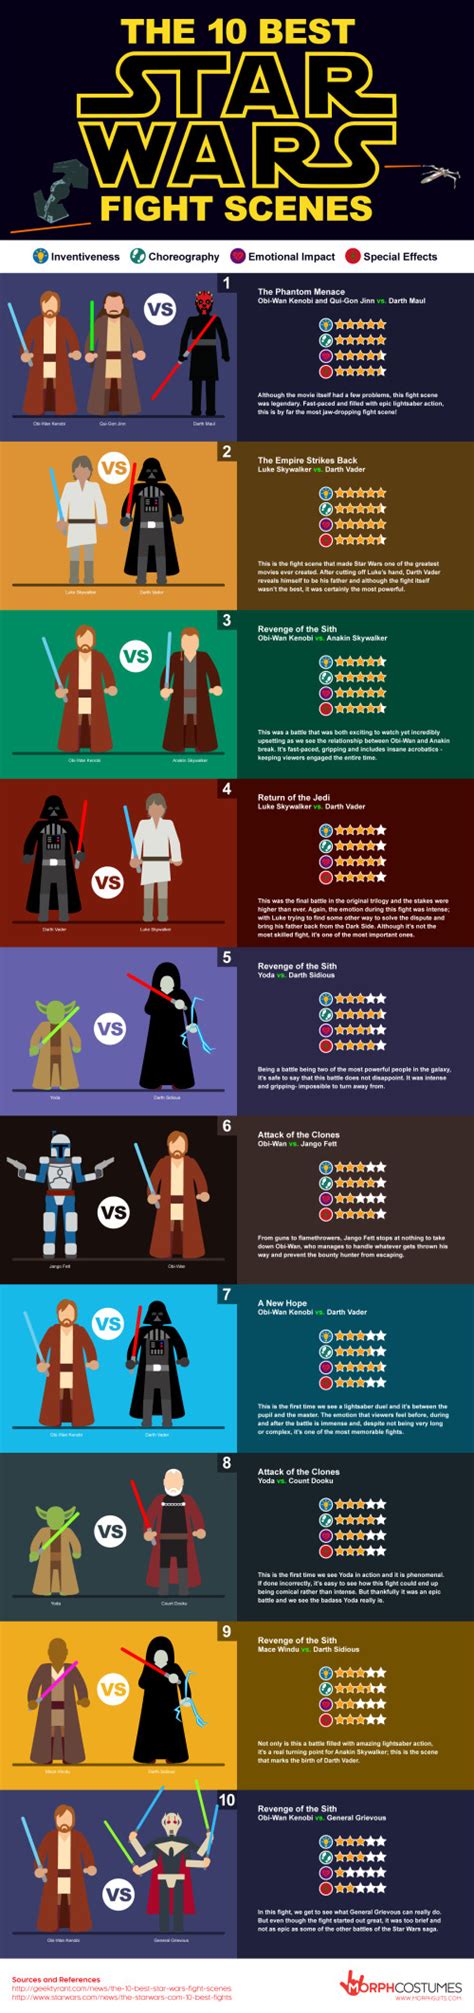 The 10 Best Star Wars Fight Scenes Blog